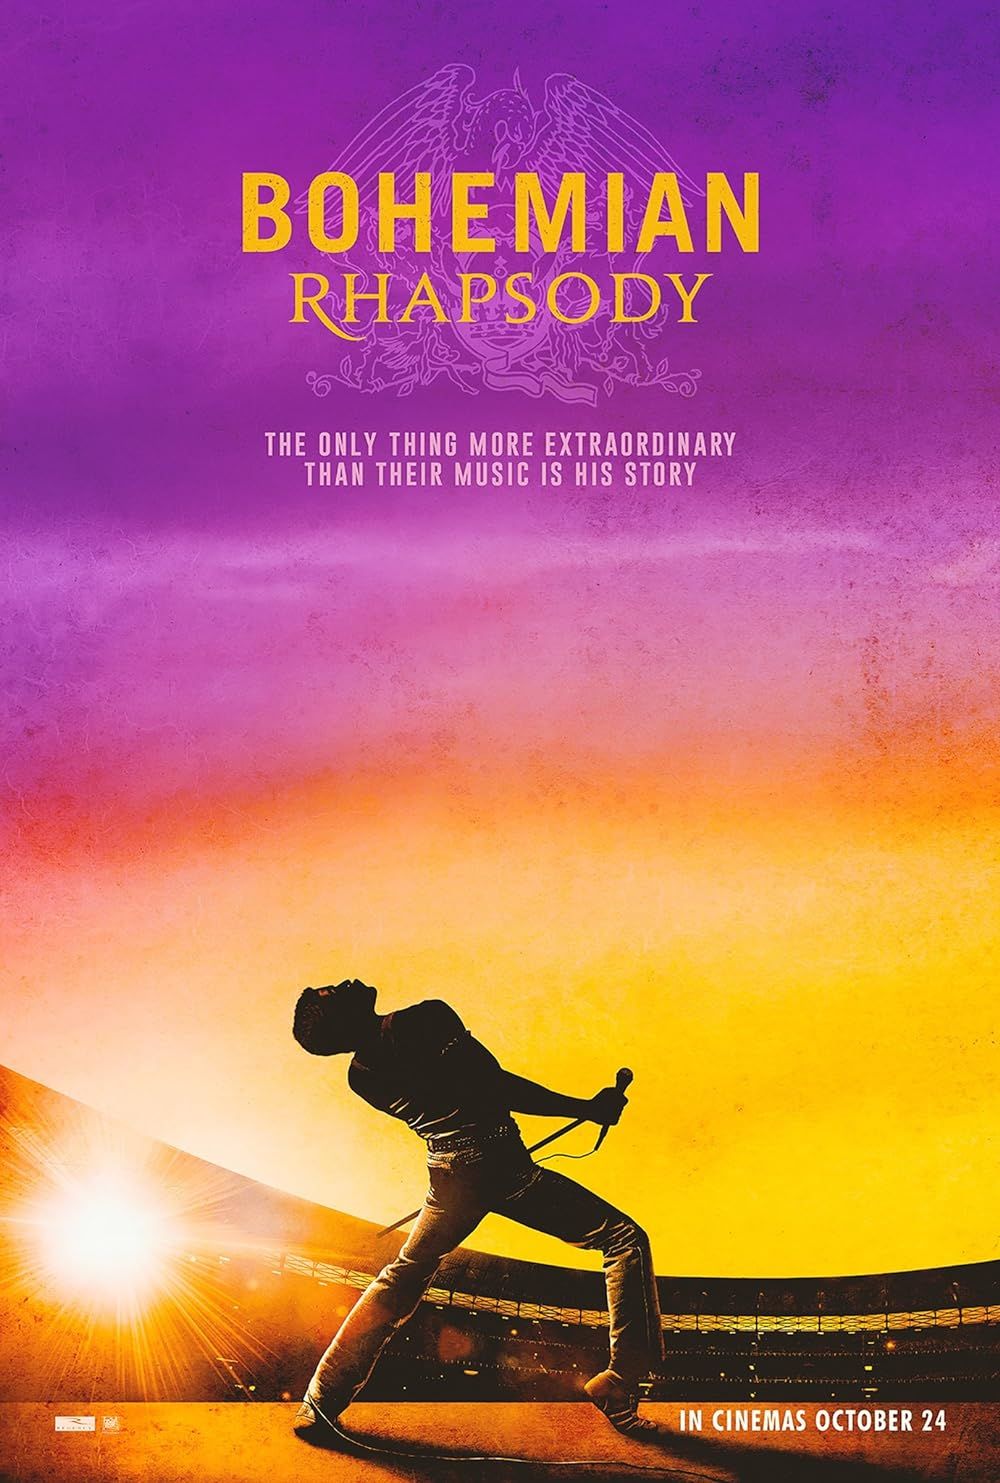 How Accurate Is Bohemian Rhapsody?